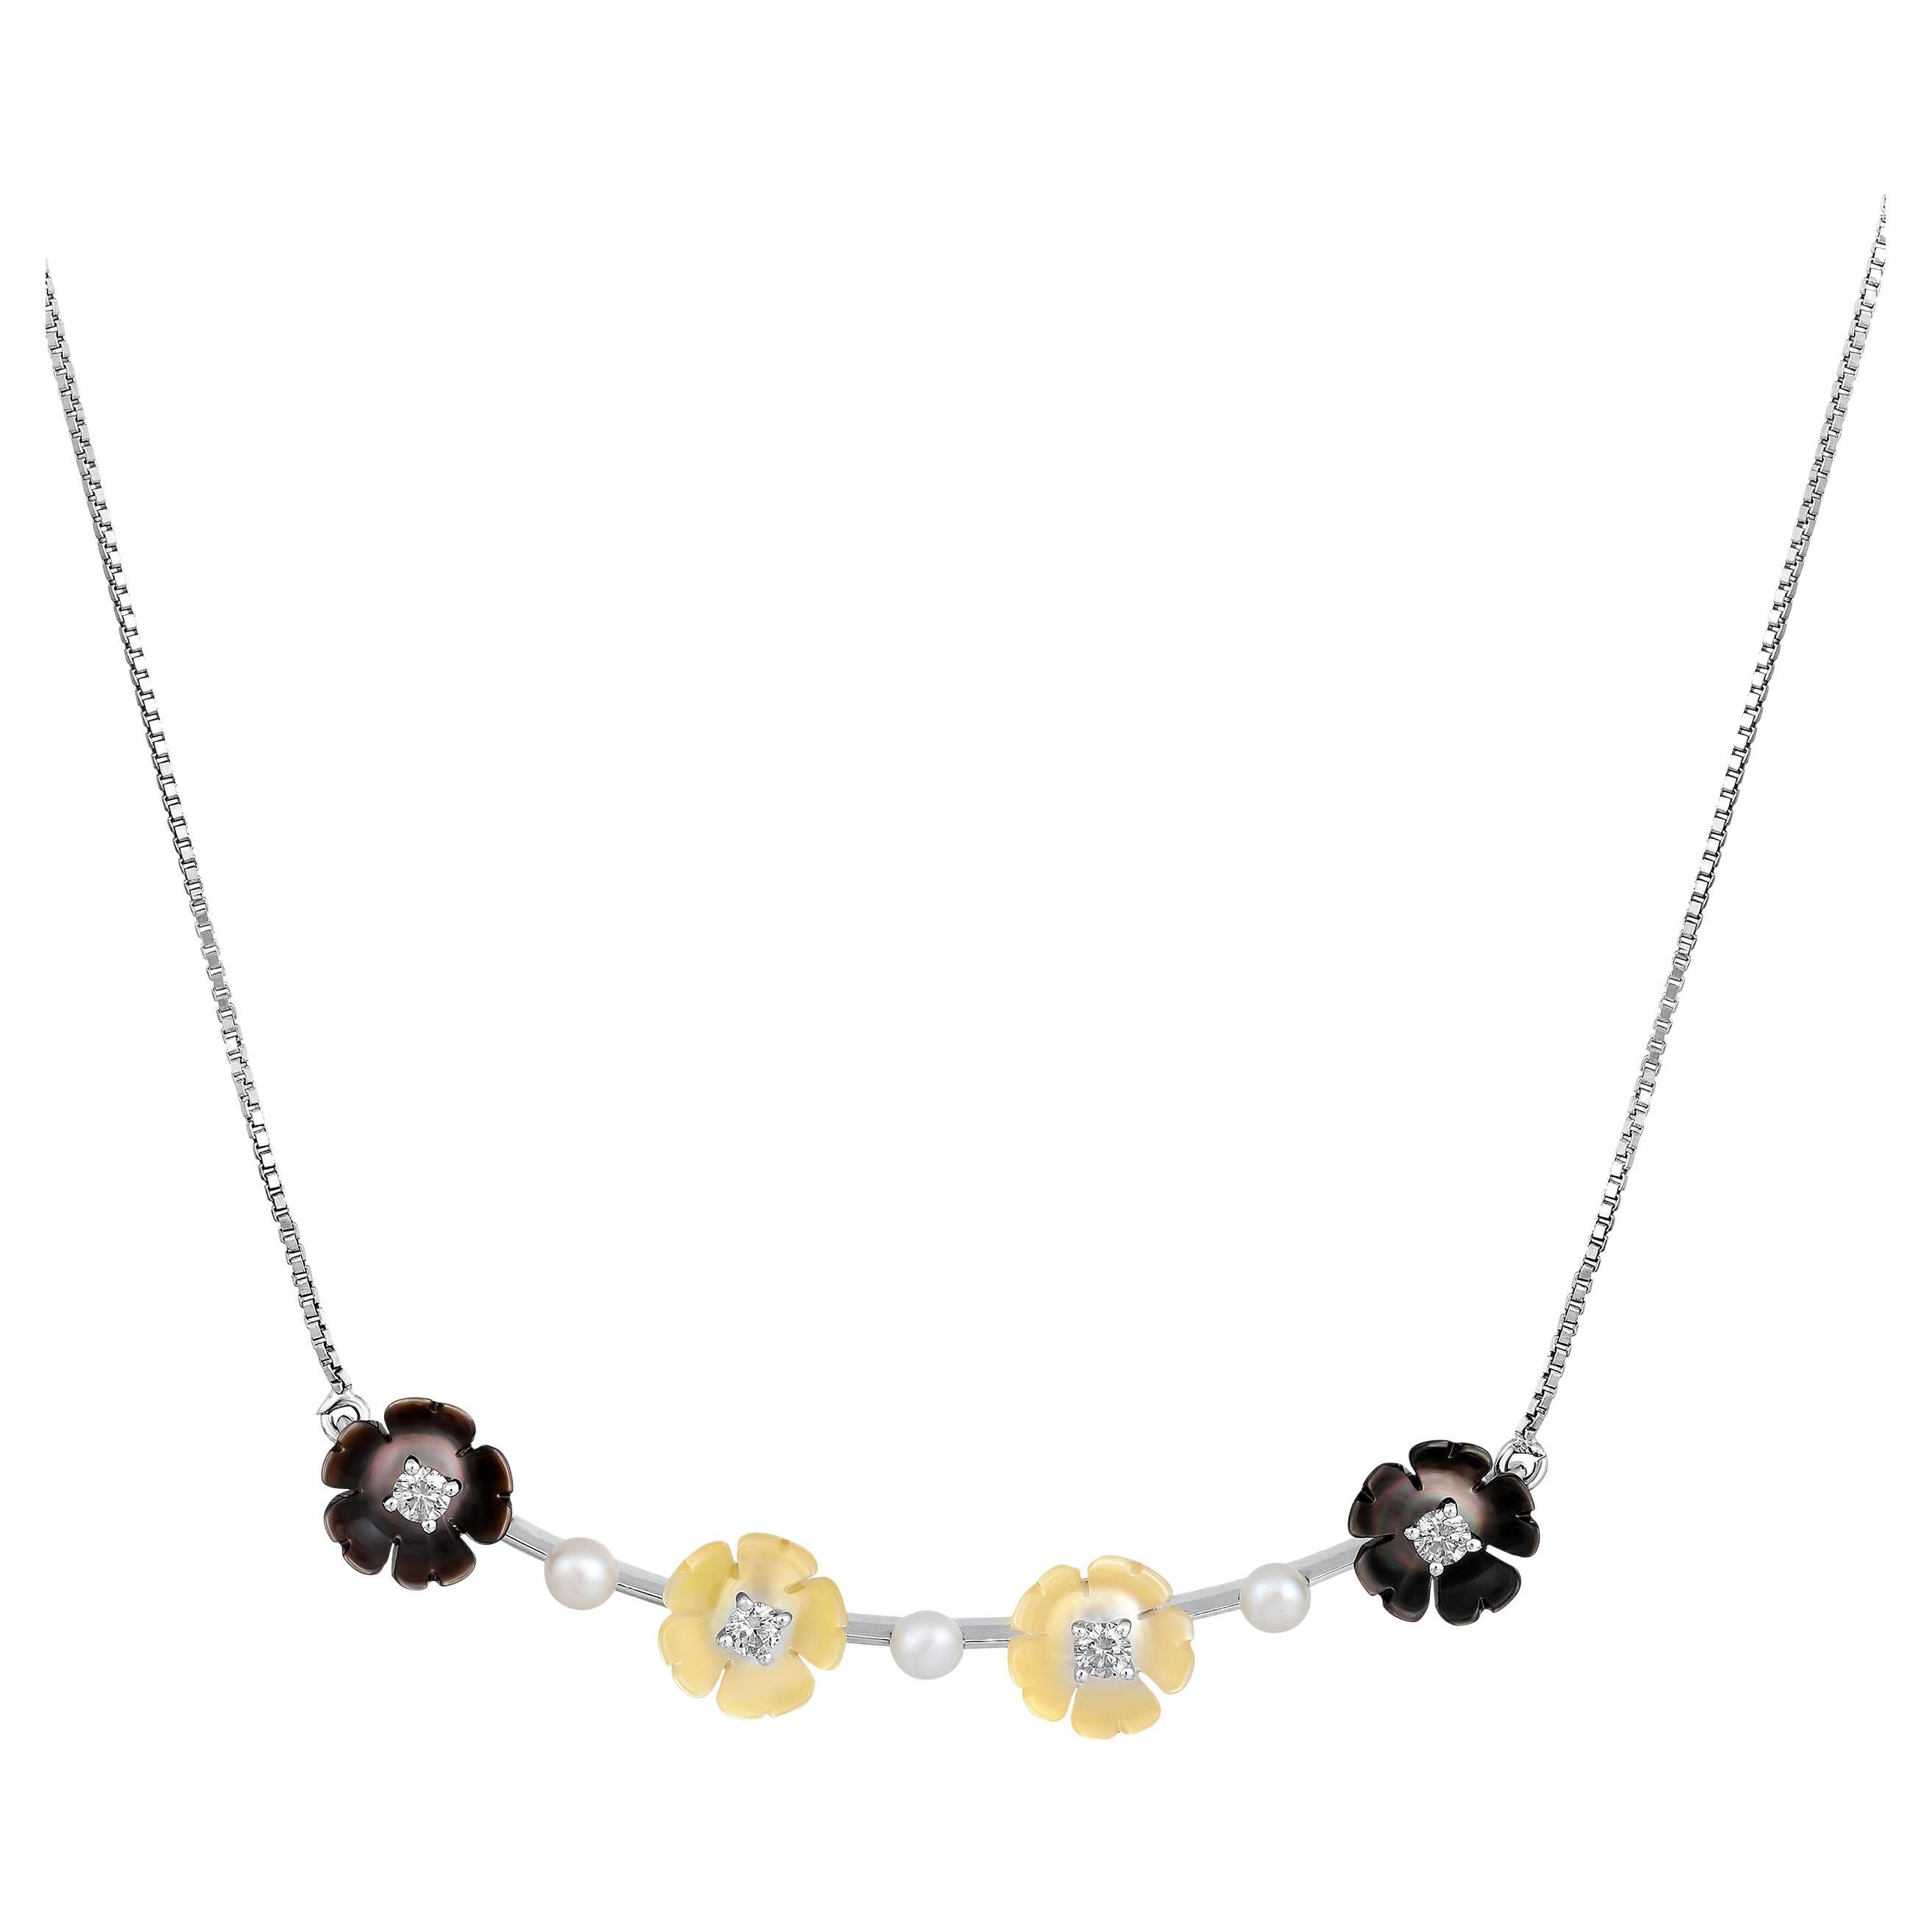 Certified 14k Gold 3.9 Carat Natural Diamond w/ Pearls Black Flower Bar Necklace